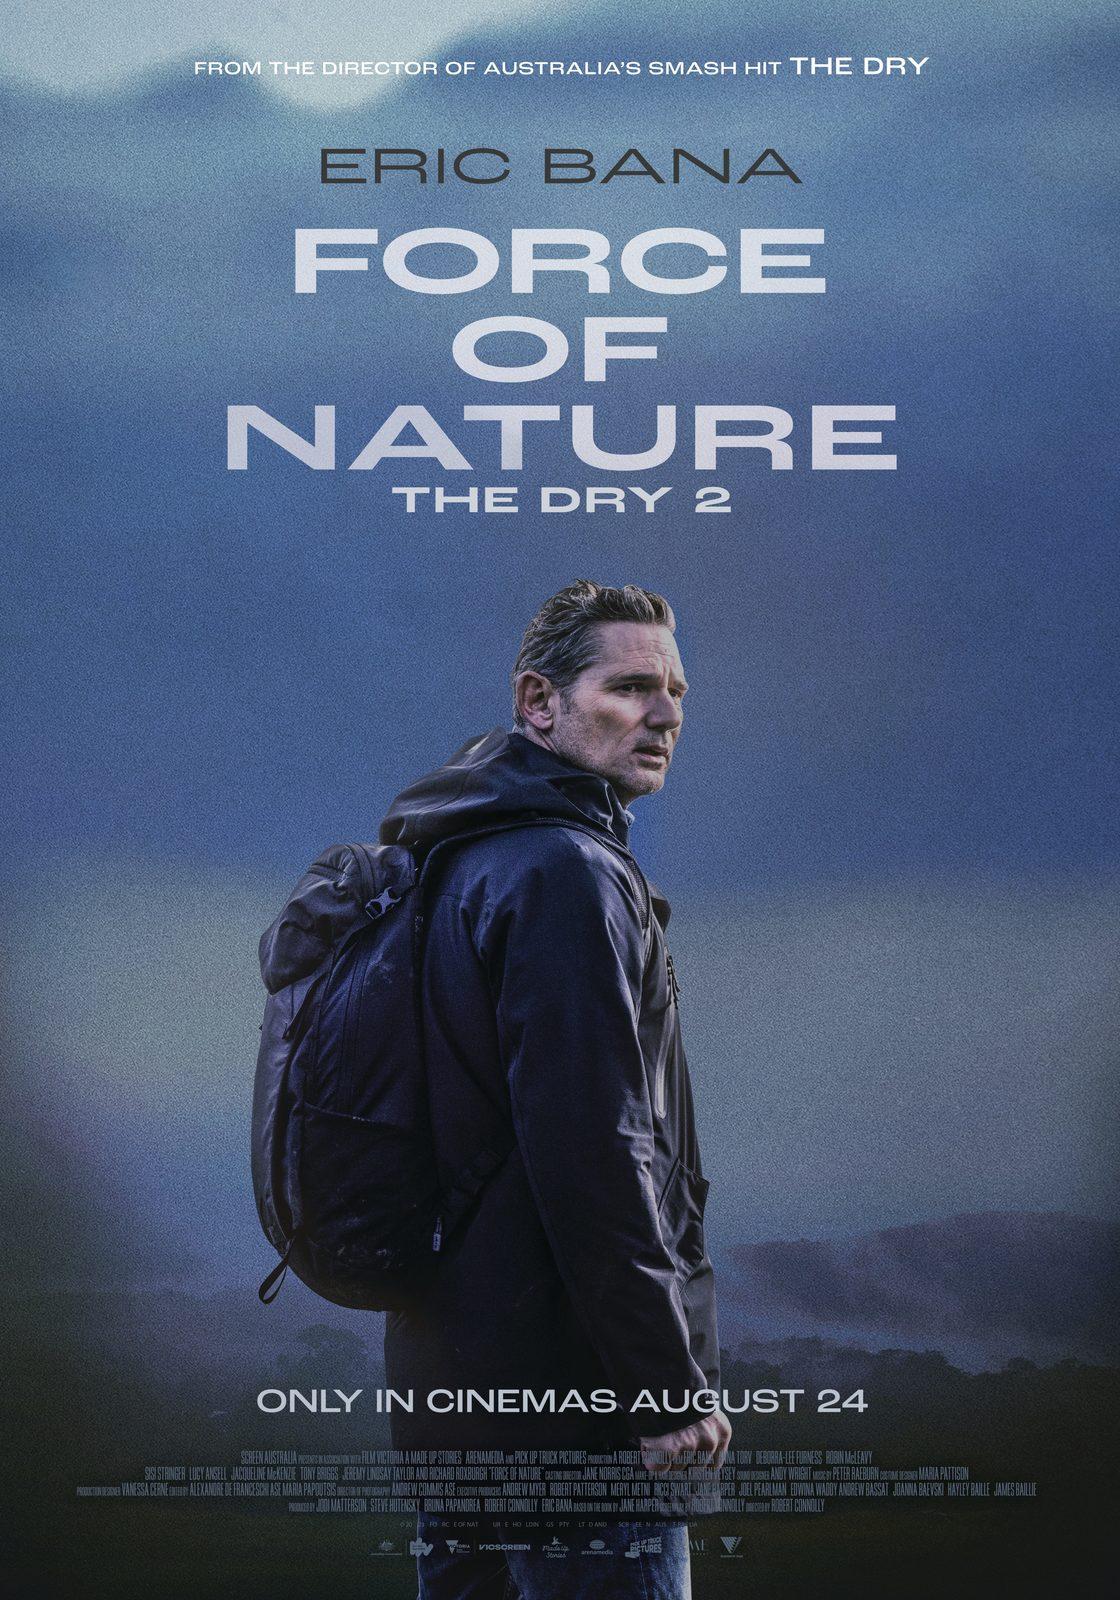 Постер фильма Город тайн: Исчезнувшая | Force of Nature: The Dry 2